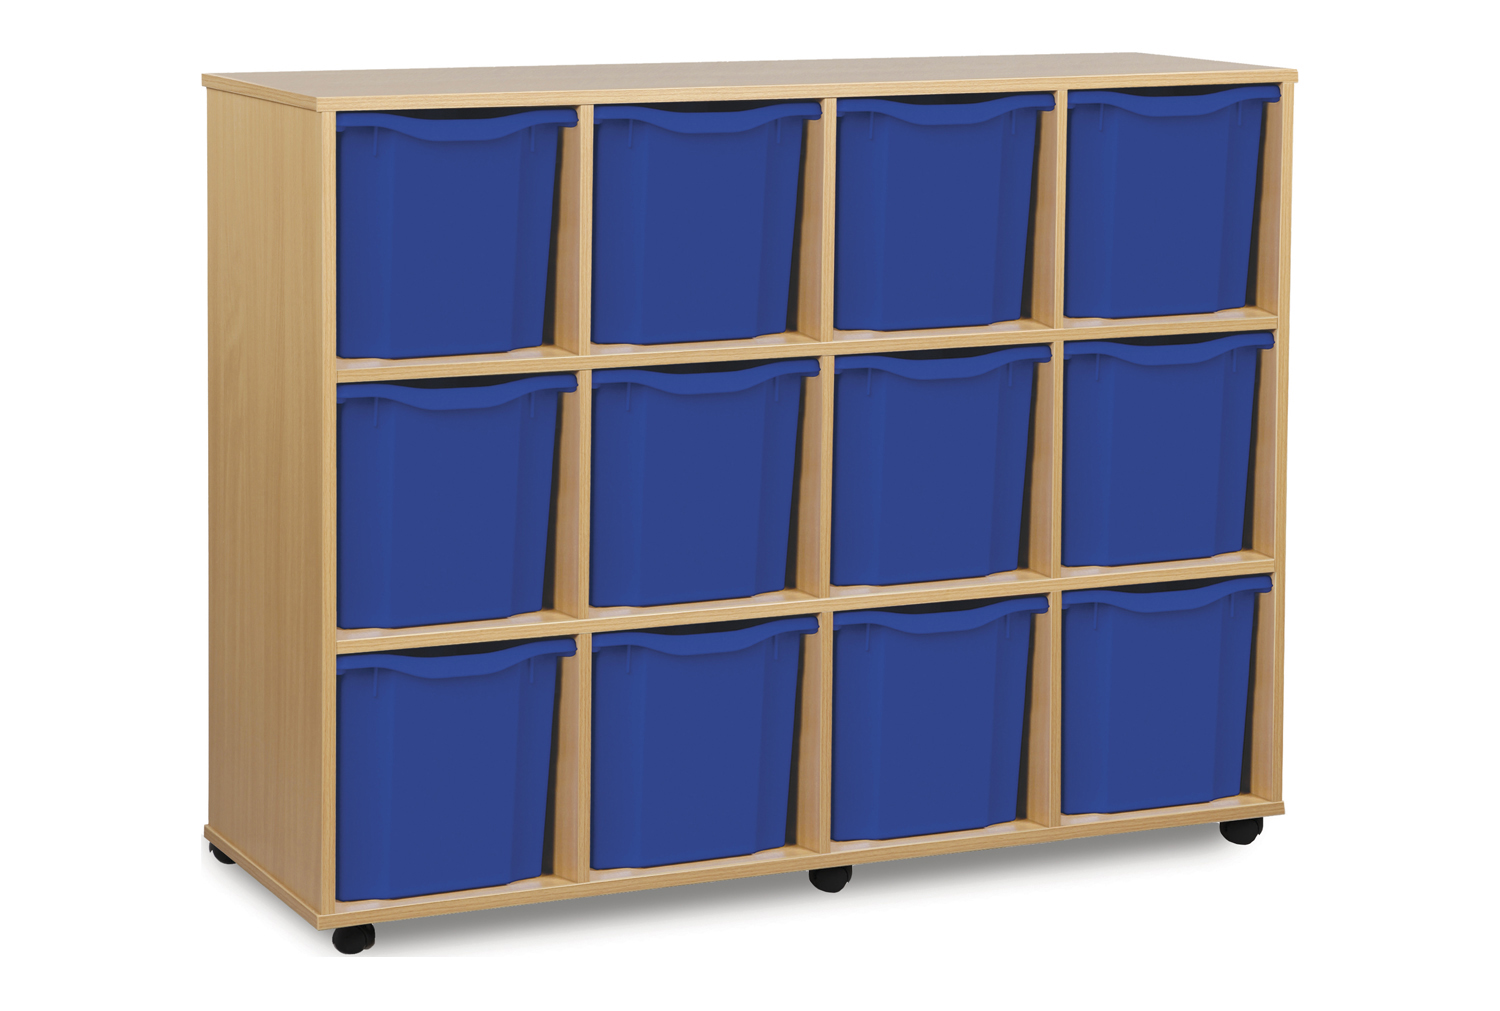 12 Jumbo Classroom Tray Storage Unit, Translucent Classroom Trays